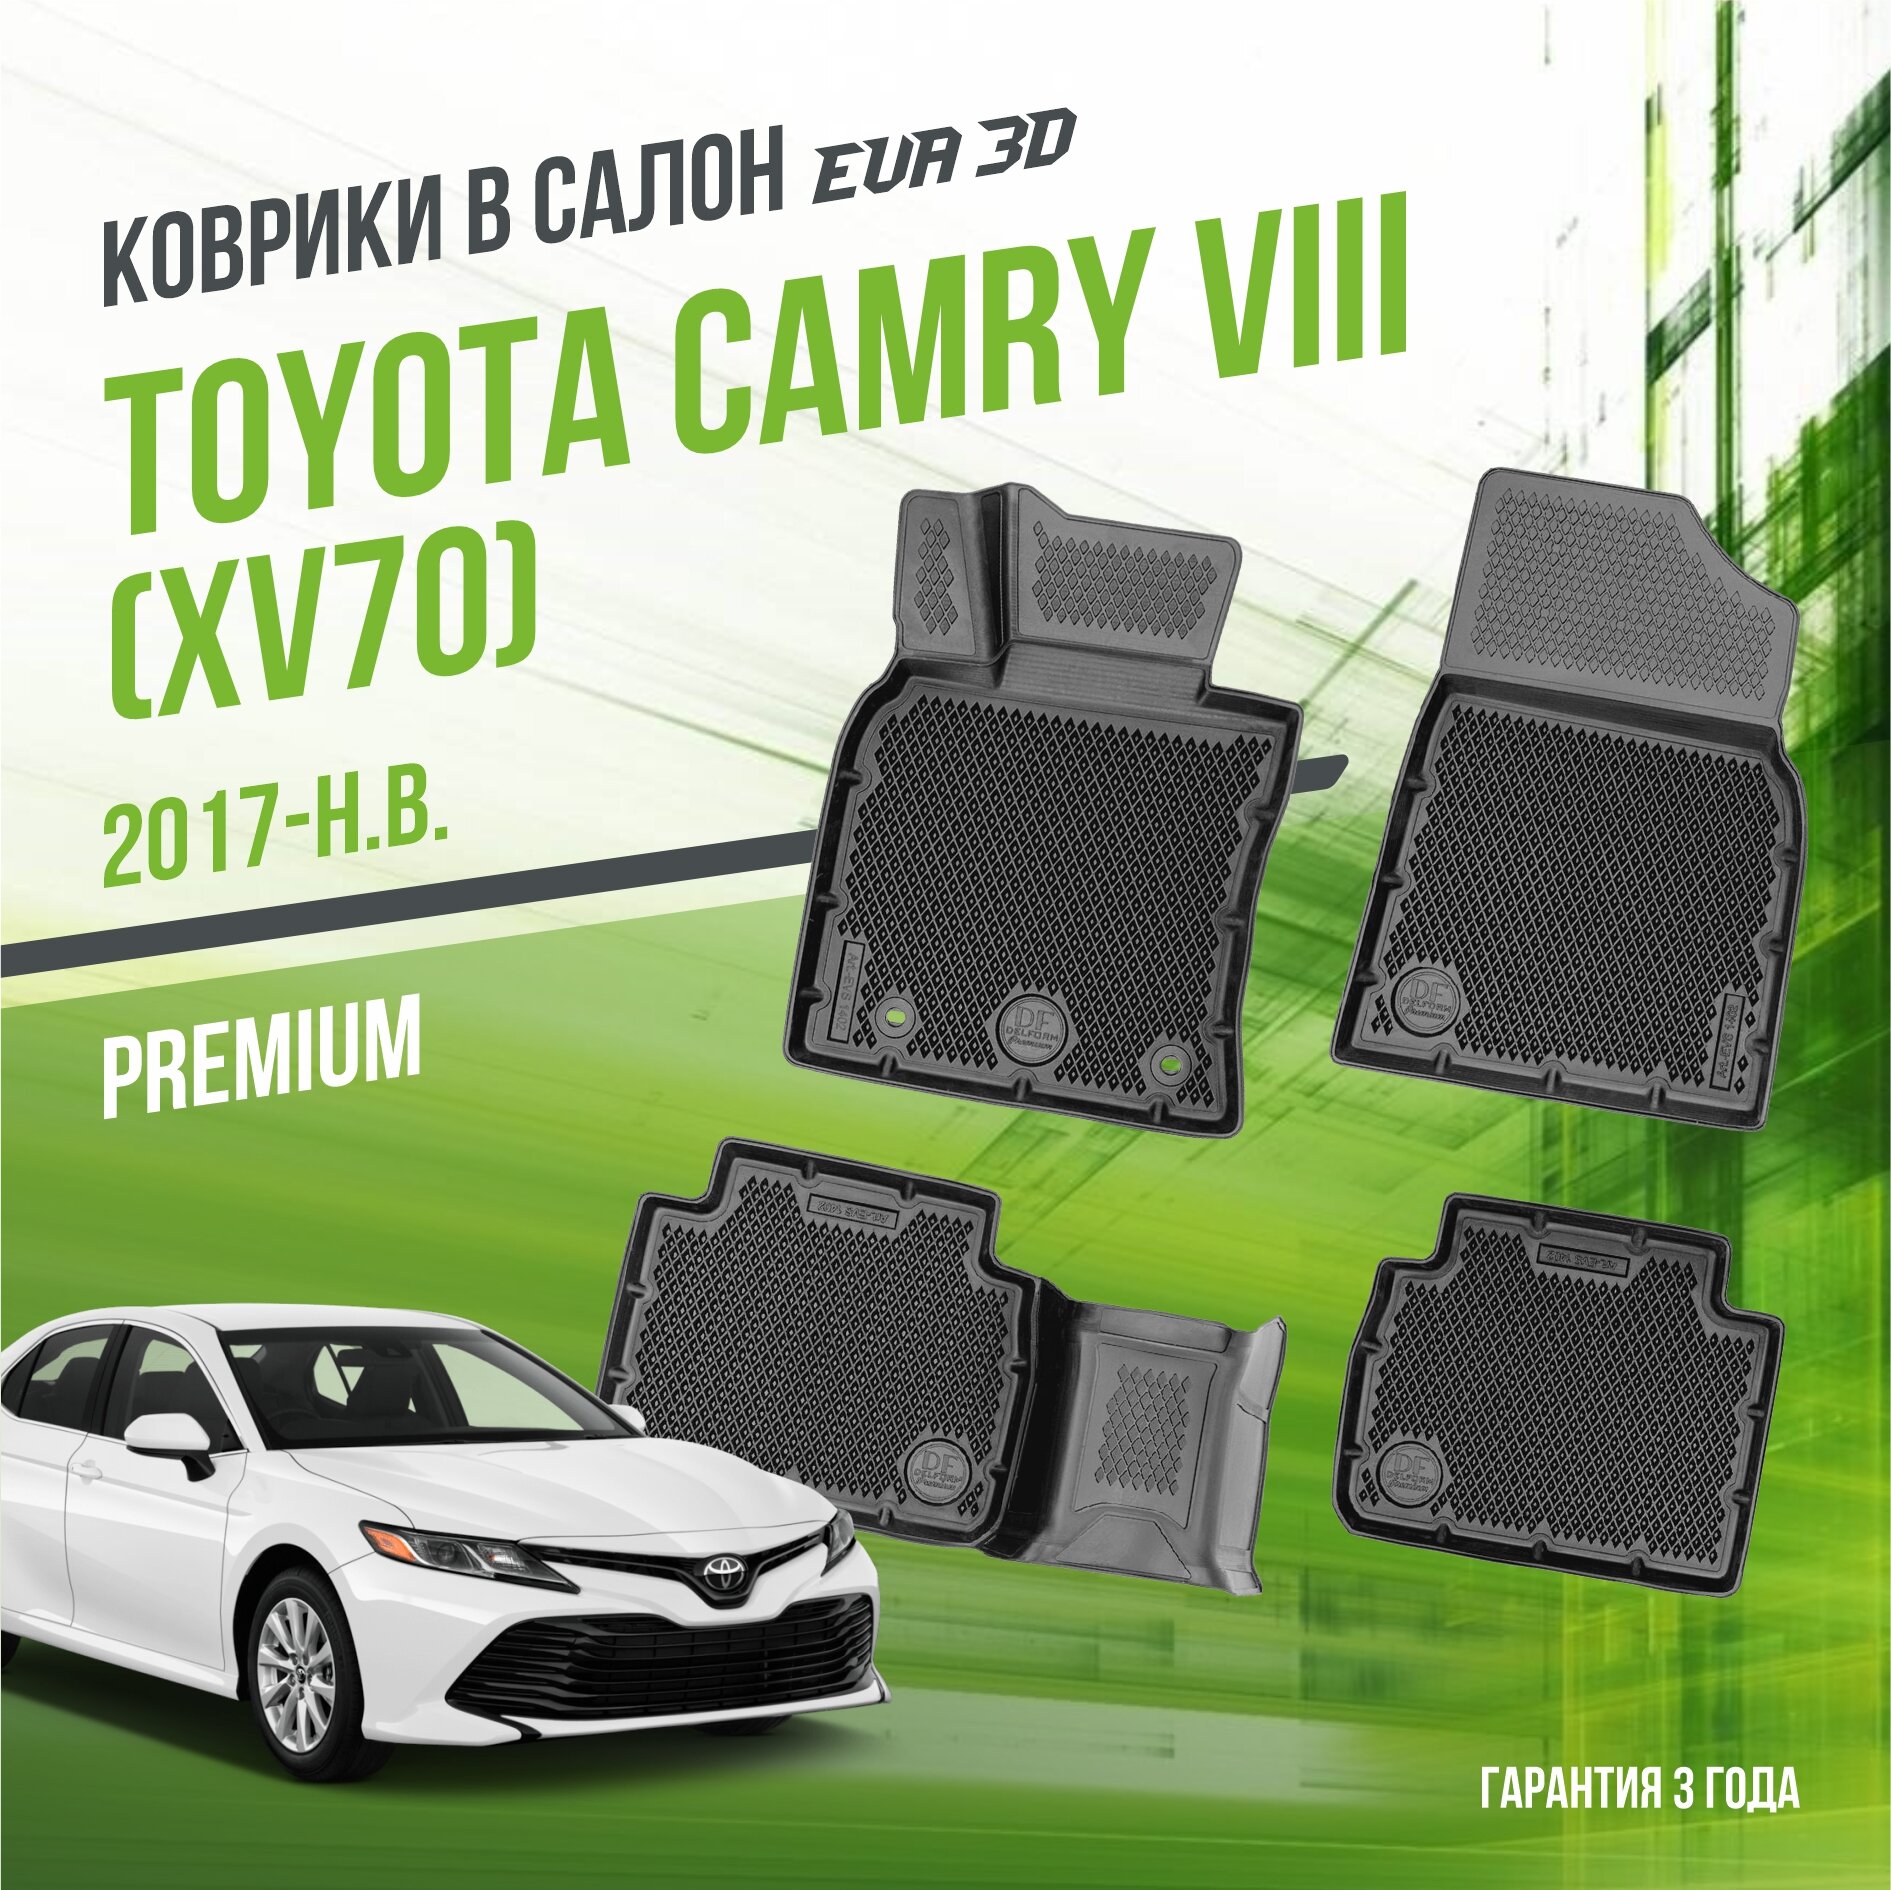 Коврики в салон Toyota Camry VIII "XV70" (2017-н. в.) / Тойота Камри 8 / набор "Premium" ковров DelForm с бортами и ячейками EVA 3D / ЭВА 3Д